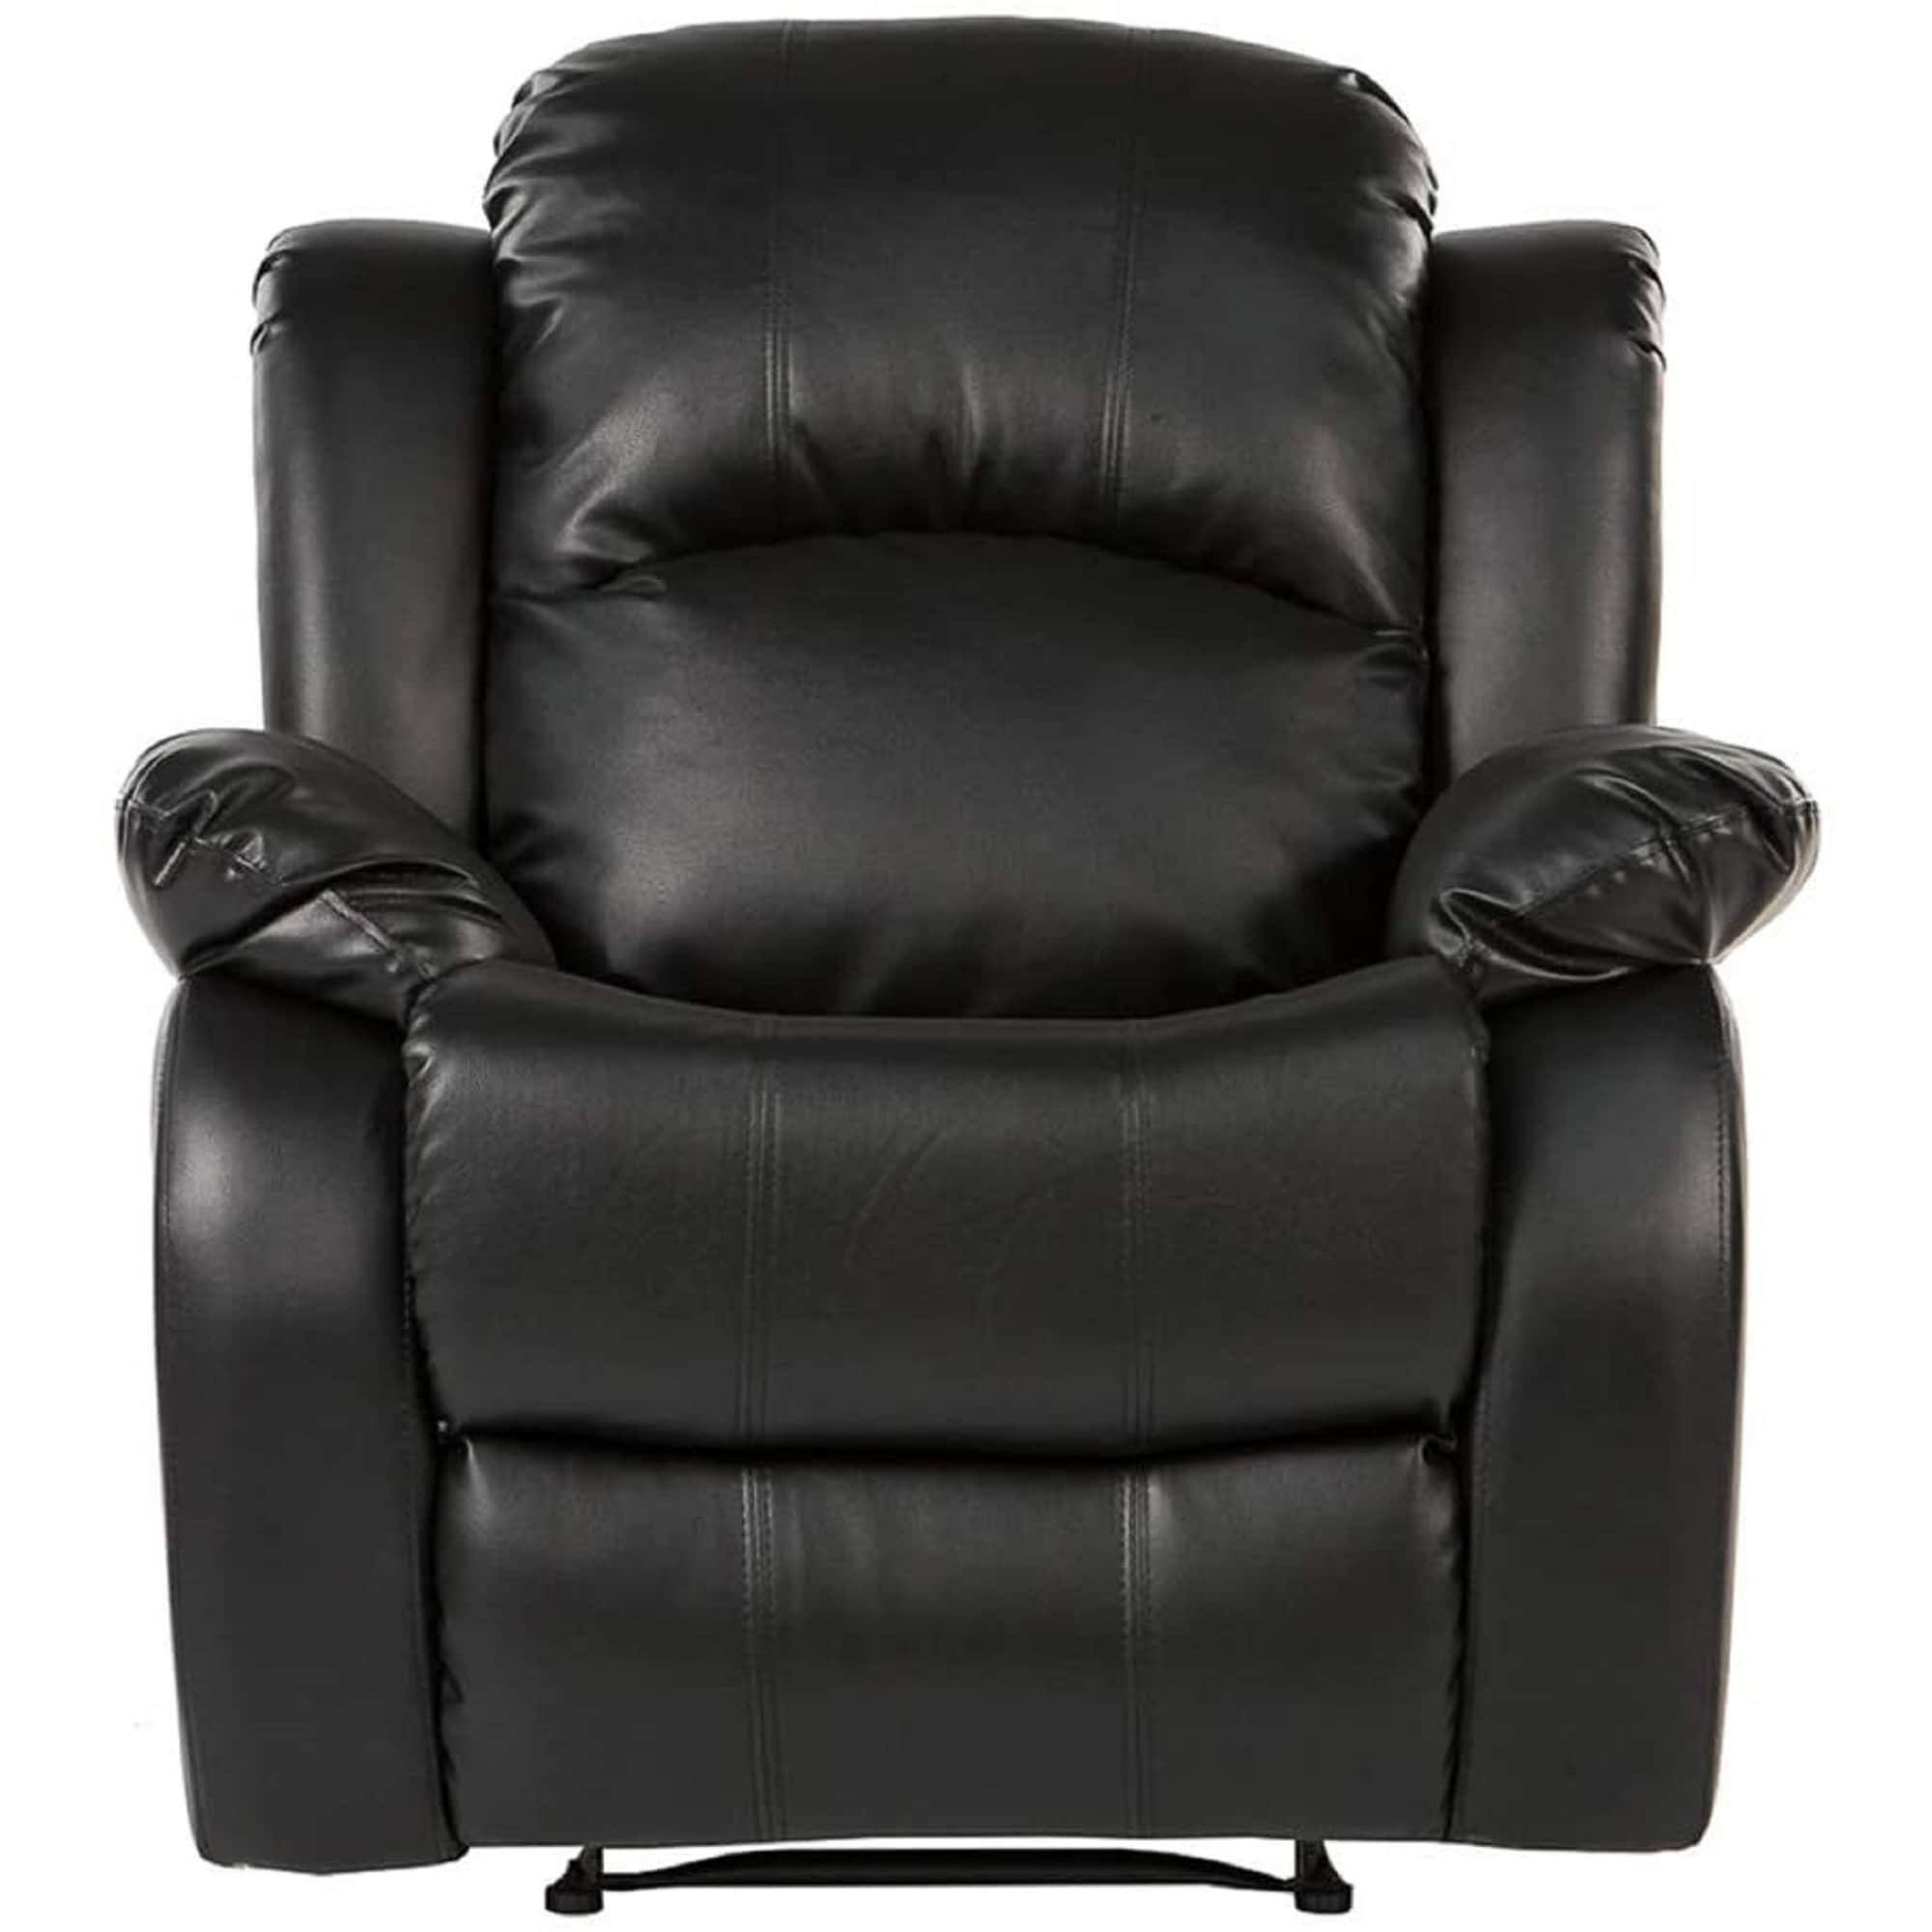 1 Seat Recliner Chair,Black(2890B C)